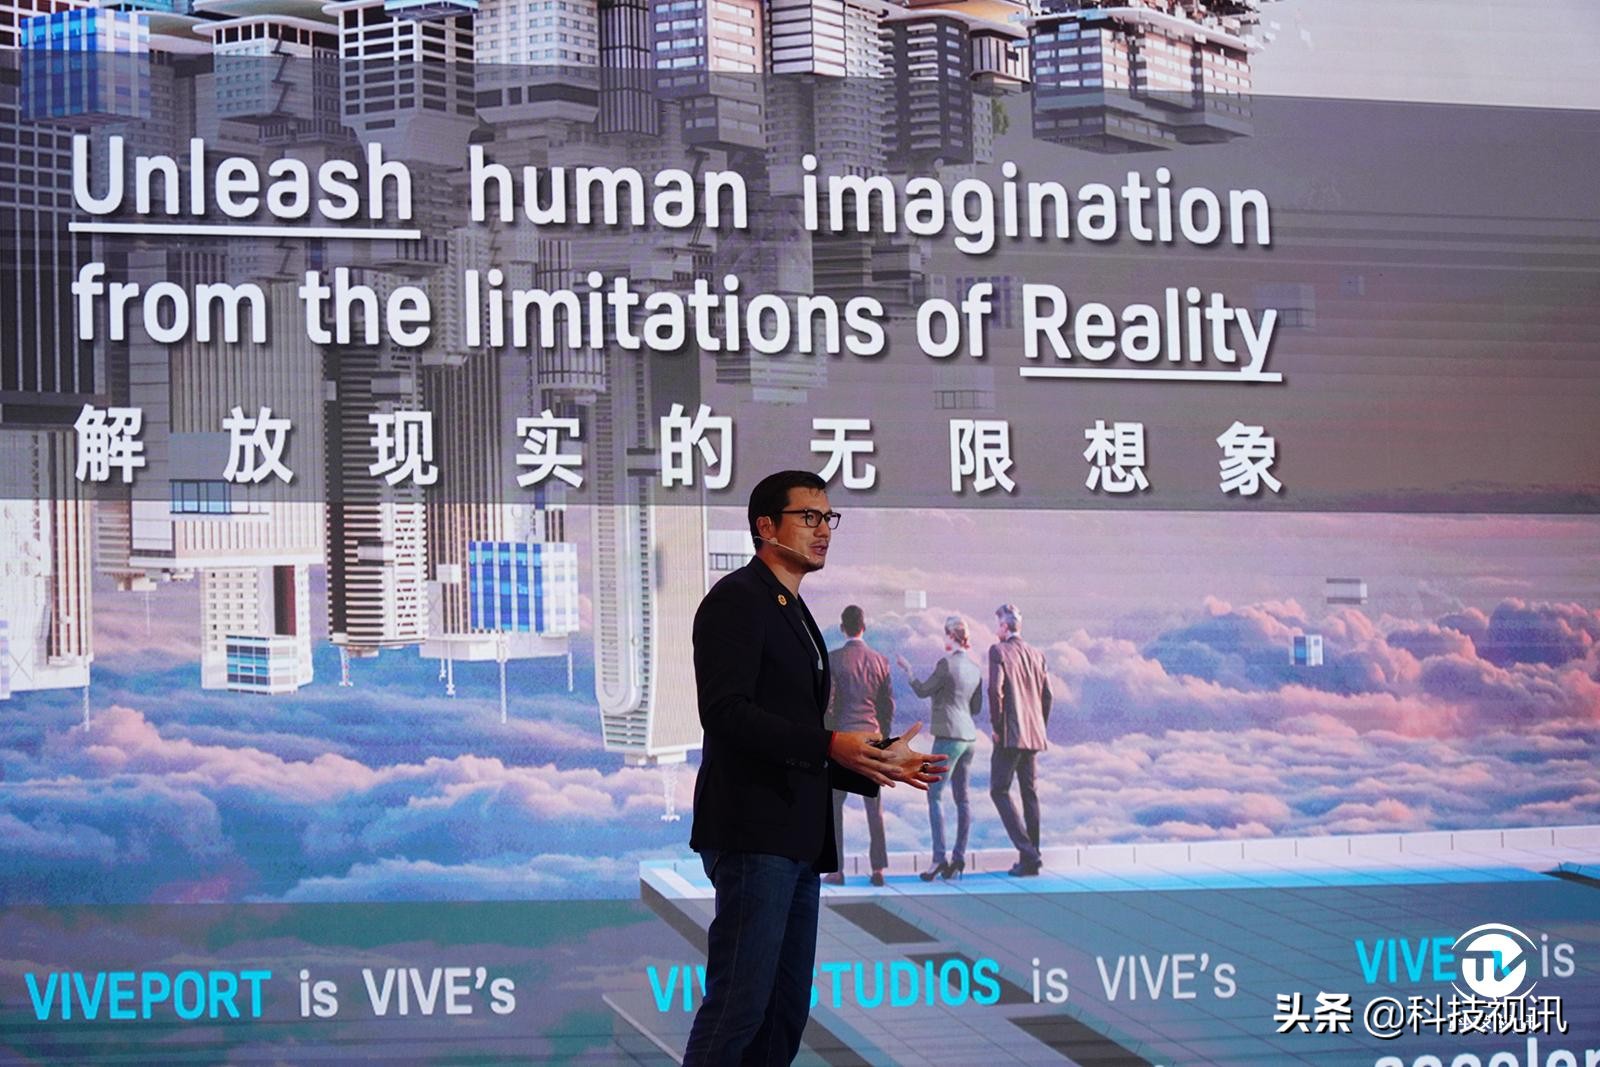 HTC VIVE协办全球VR产业链交流会产业生态分社区论坛 行业翘楚齐聚一堂